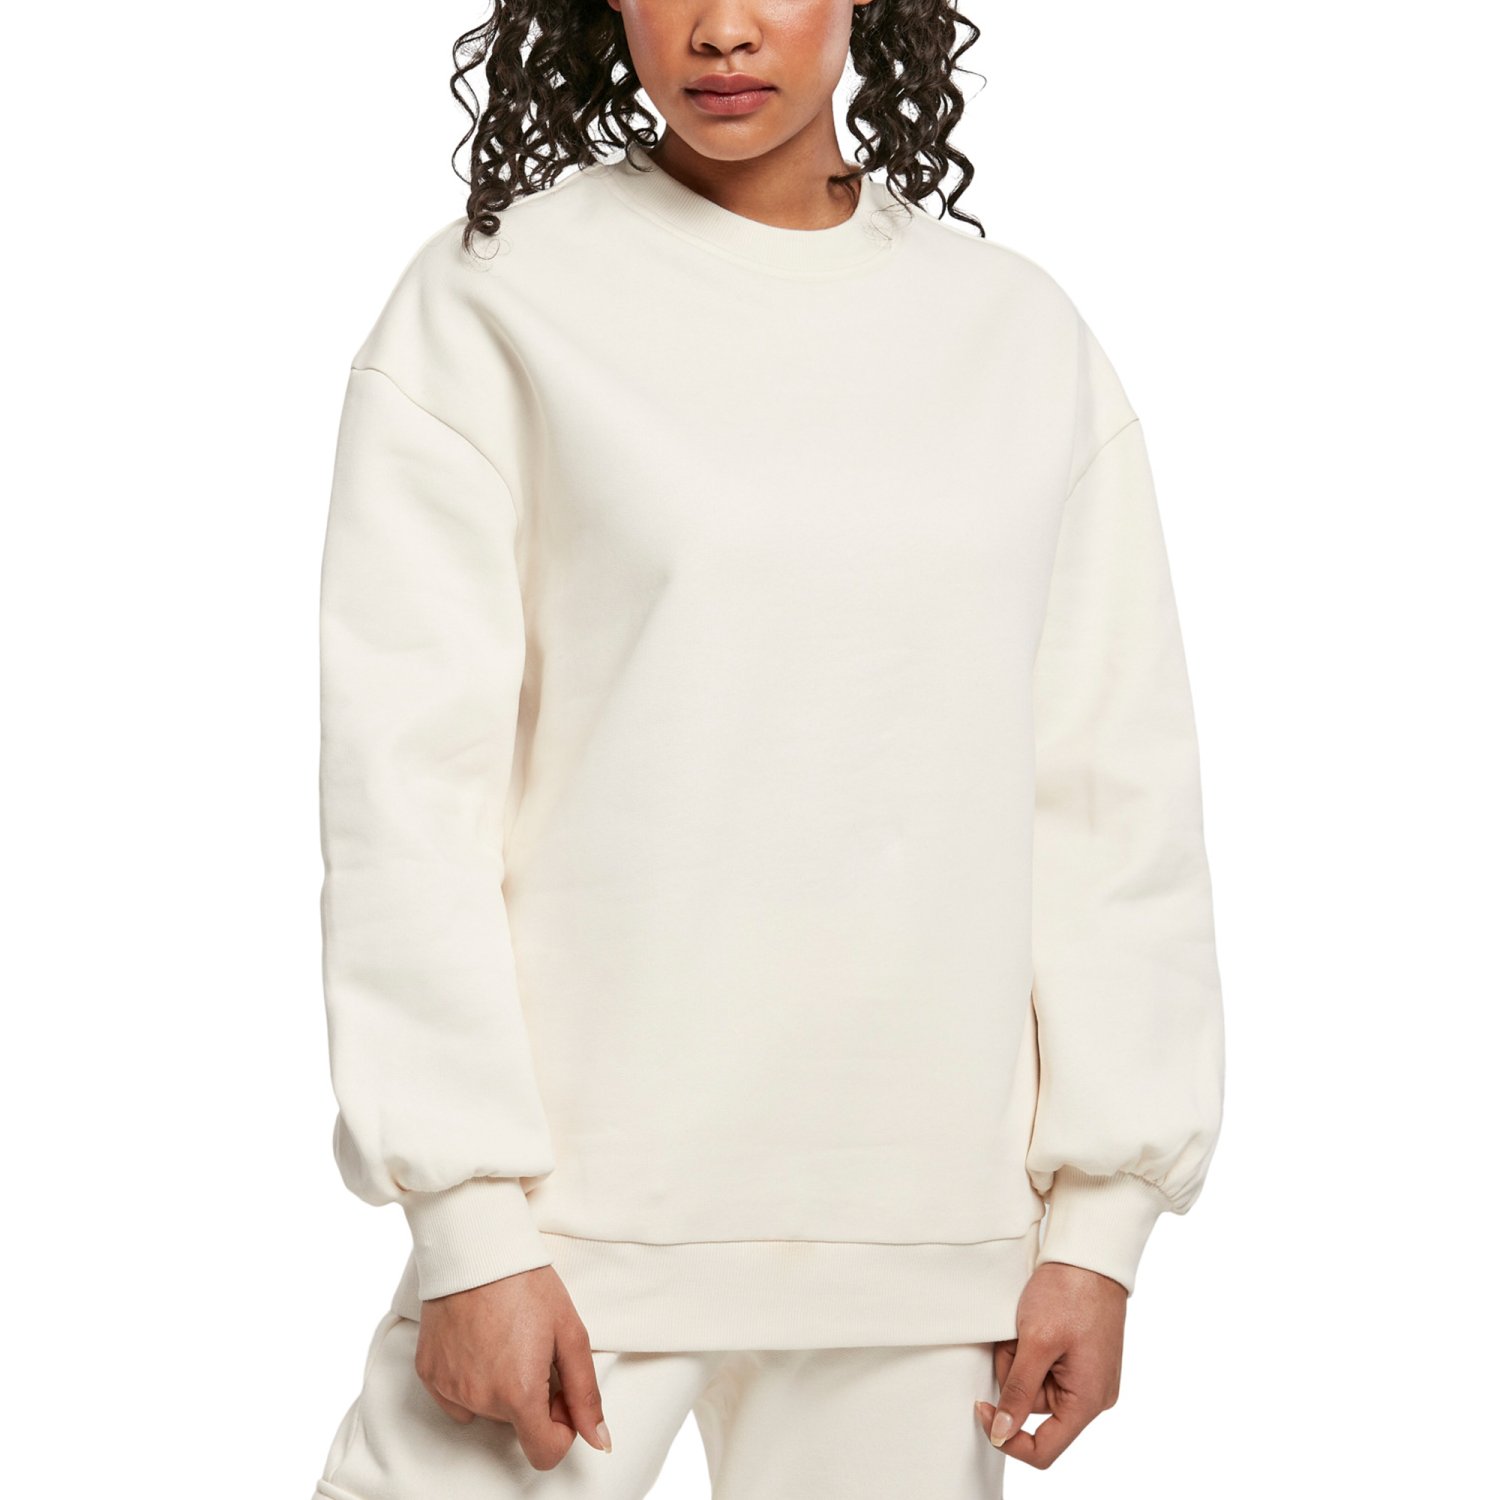 | Sweatshirts Urban Oversized | ORGANIC | - | Pullover Ladies Street Classics Urban Shop FRAUEN Crewneck Sweater